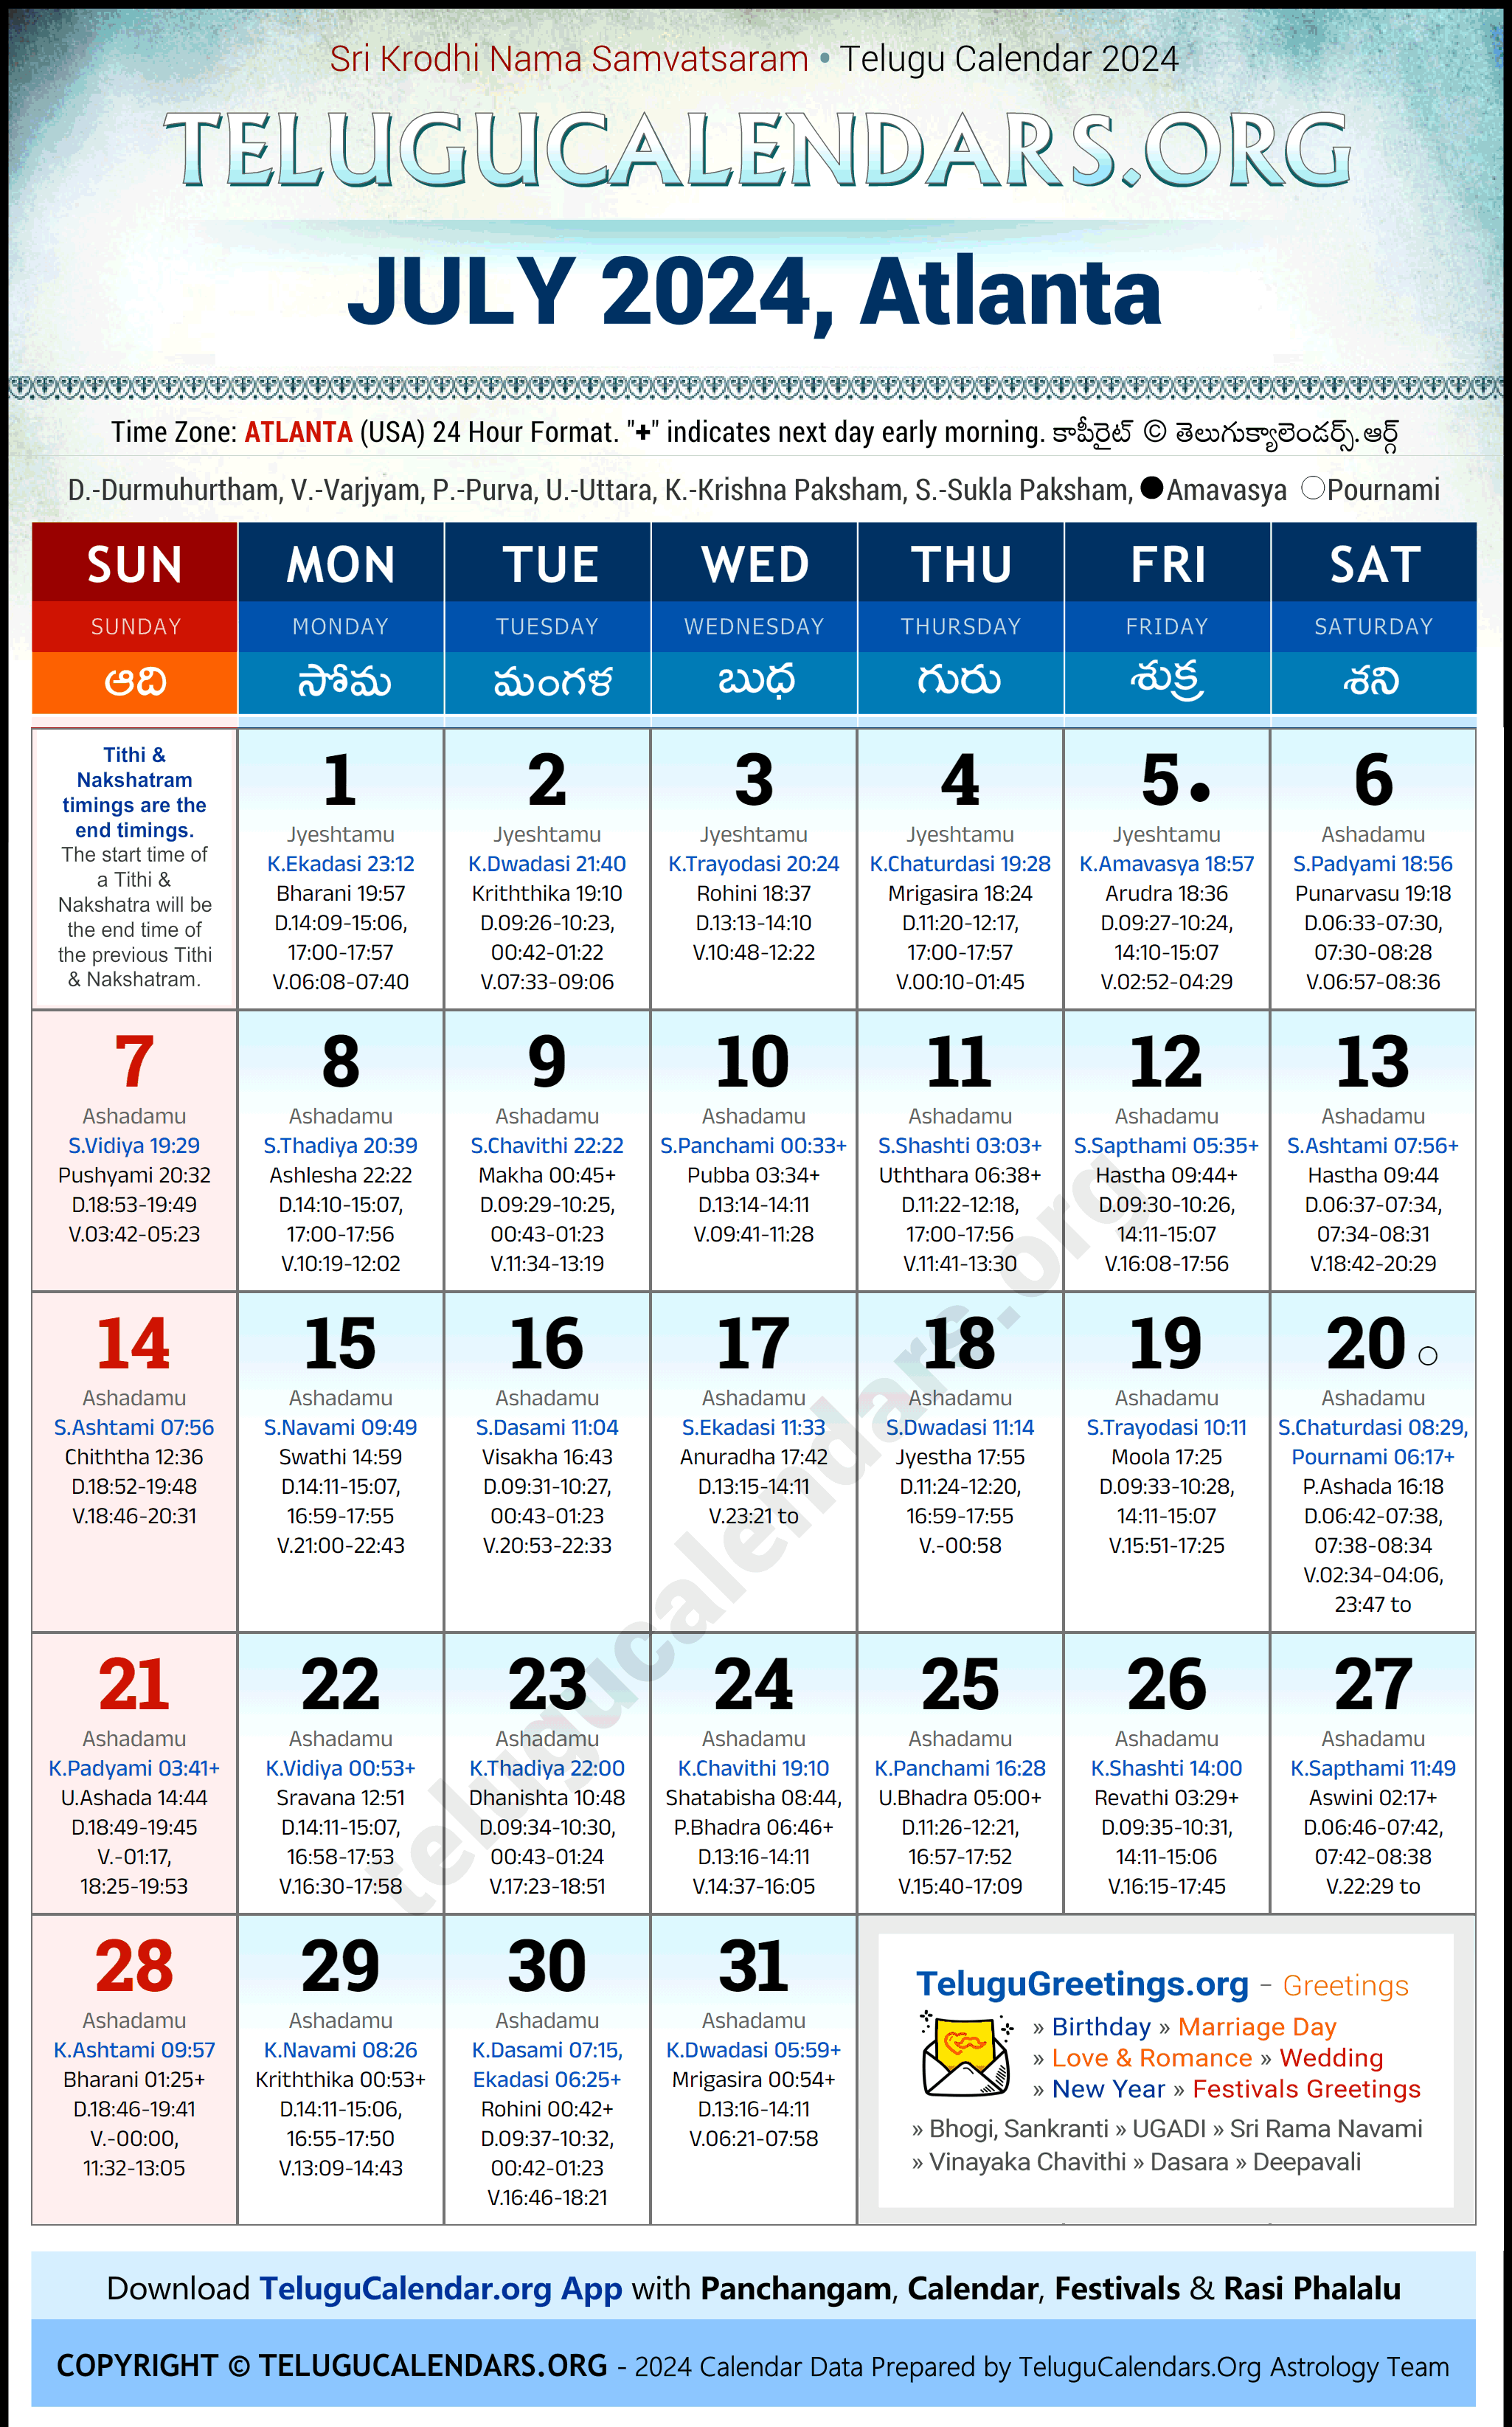 Telugu Calendar 2024 July Festivals for Atlanta